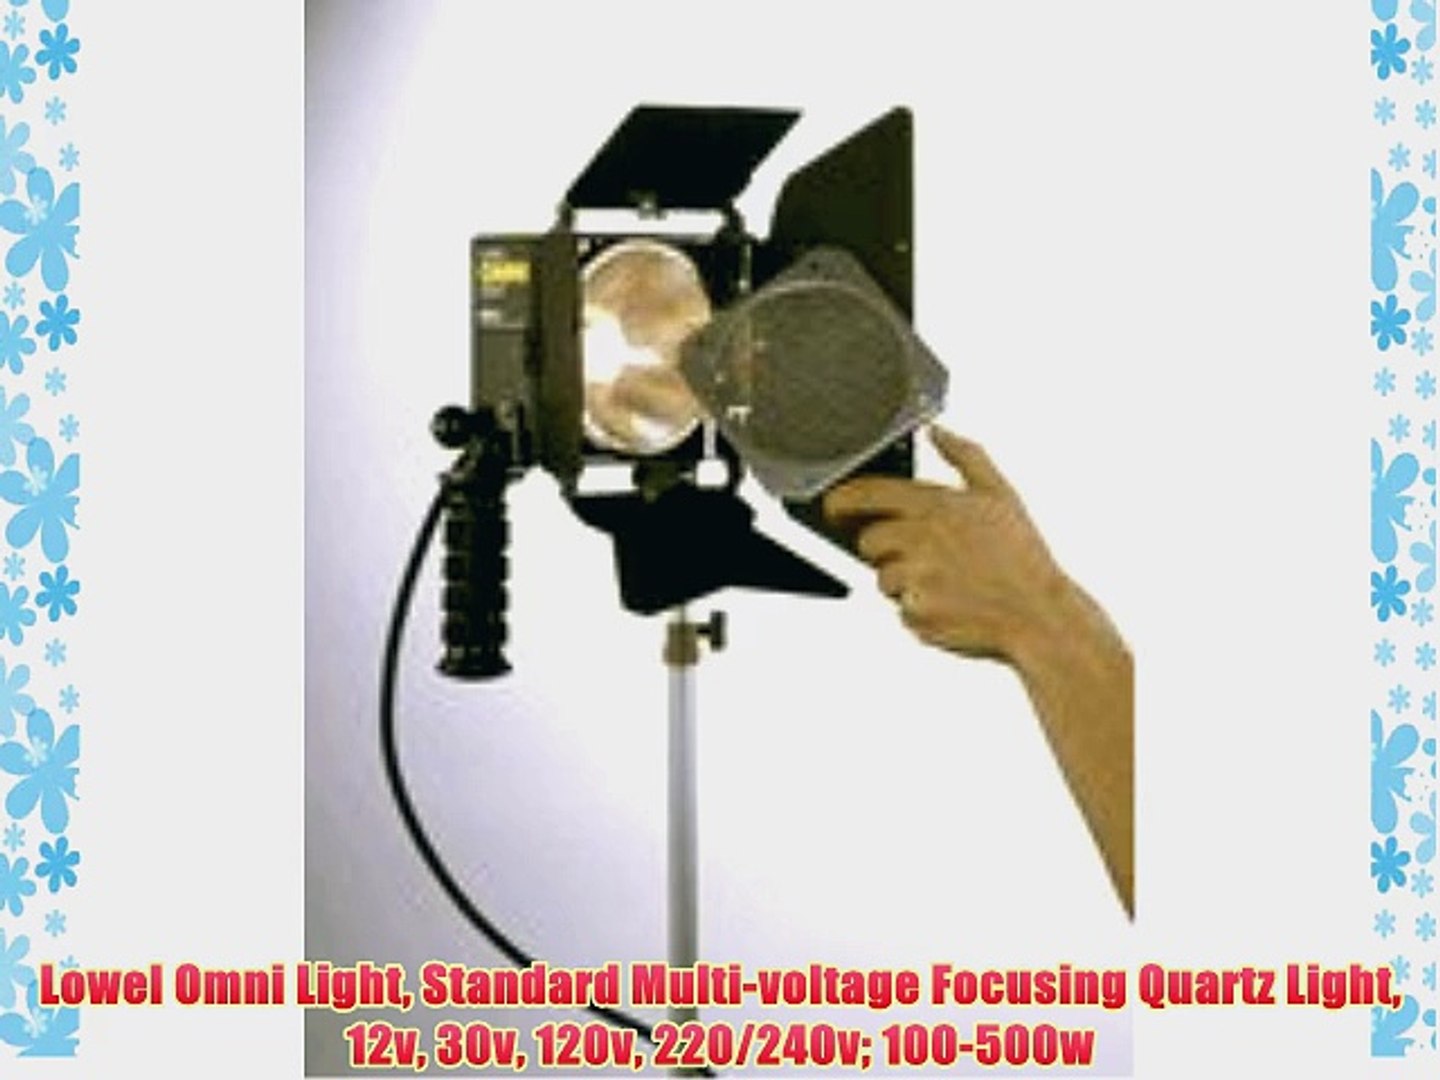 Standard Multi-voltage Focusing Quartz Light 220//240v; 100-500w 12v 120v Lowel Omni Light 30v